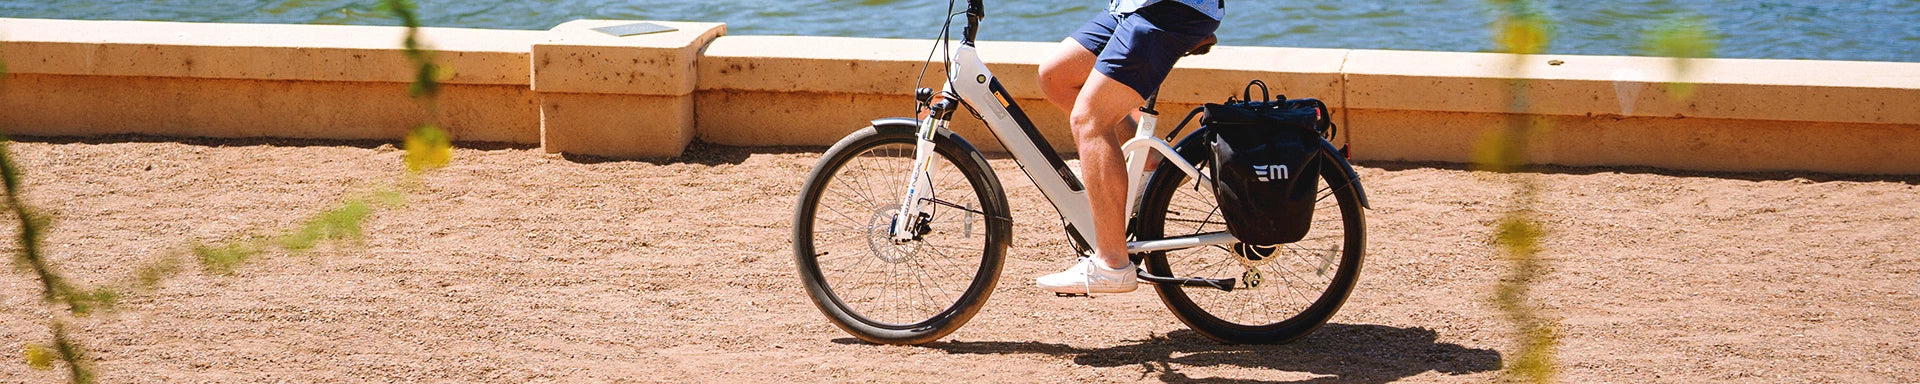 man riding an electric bicycle